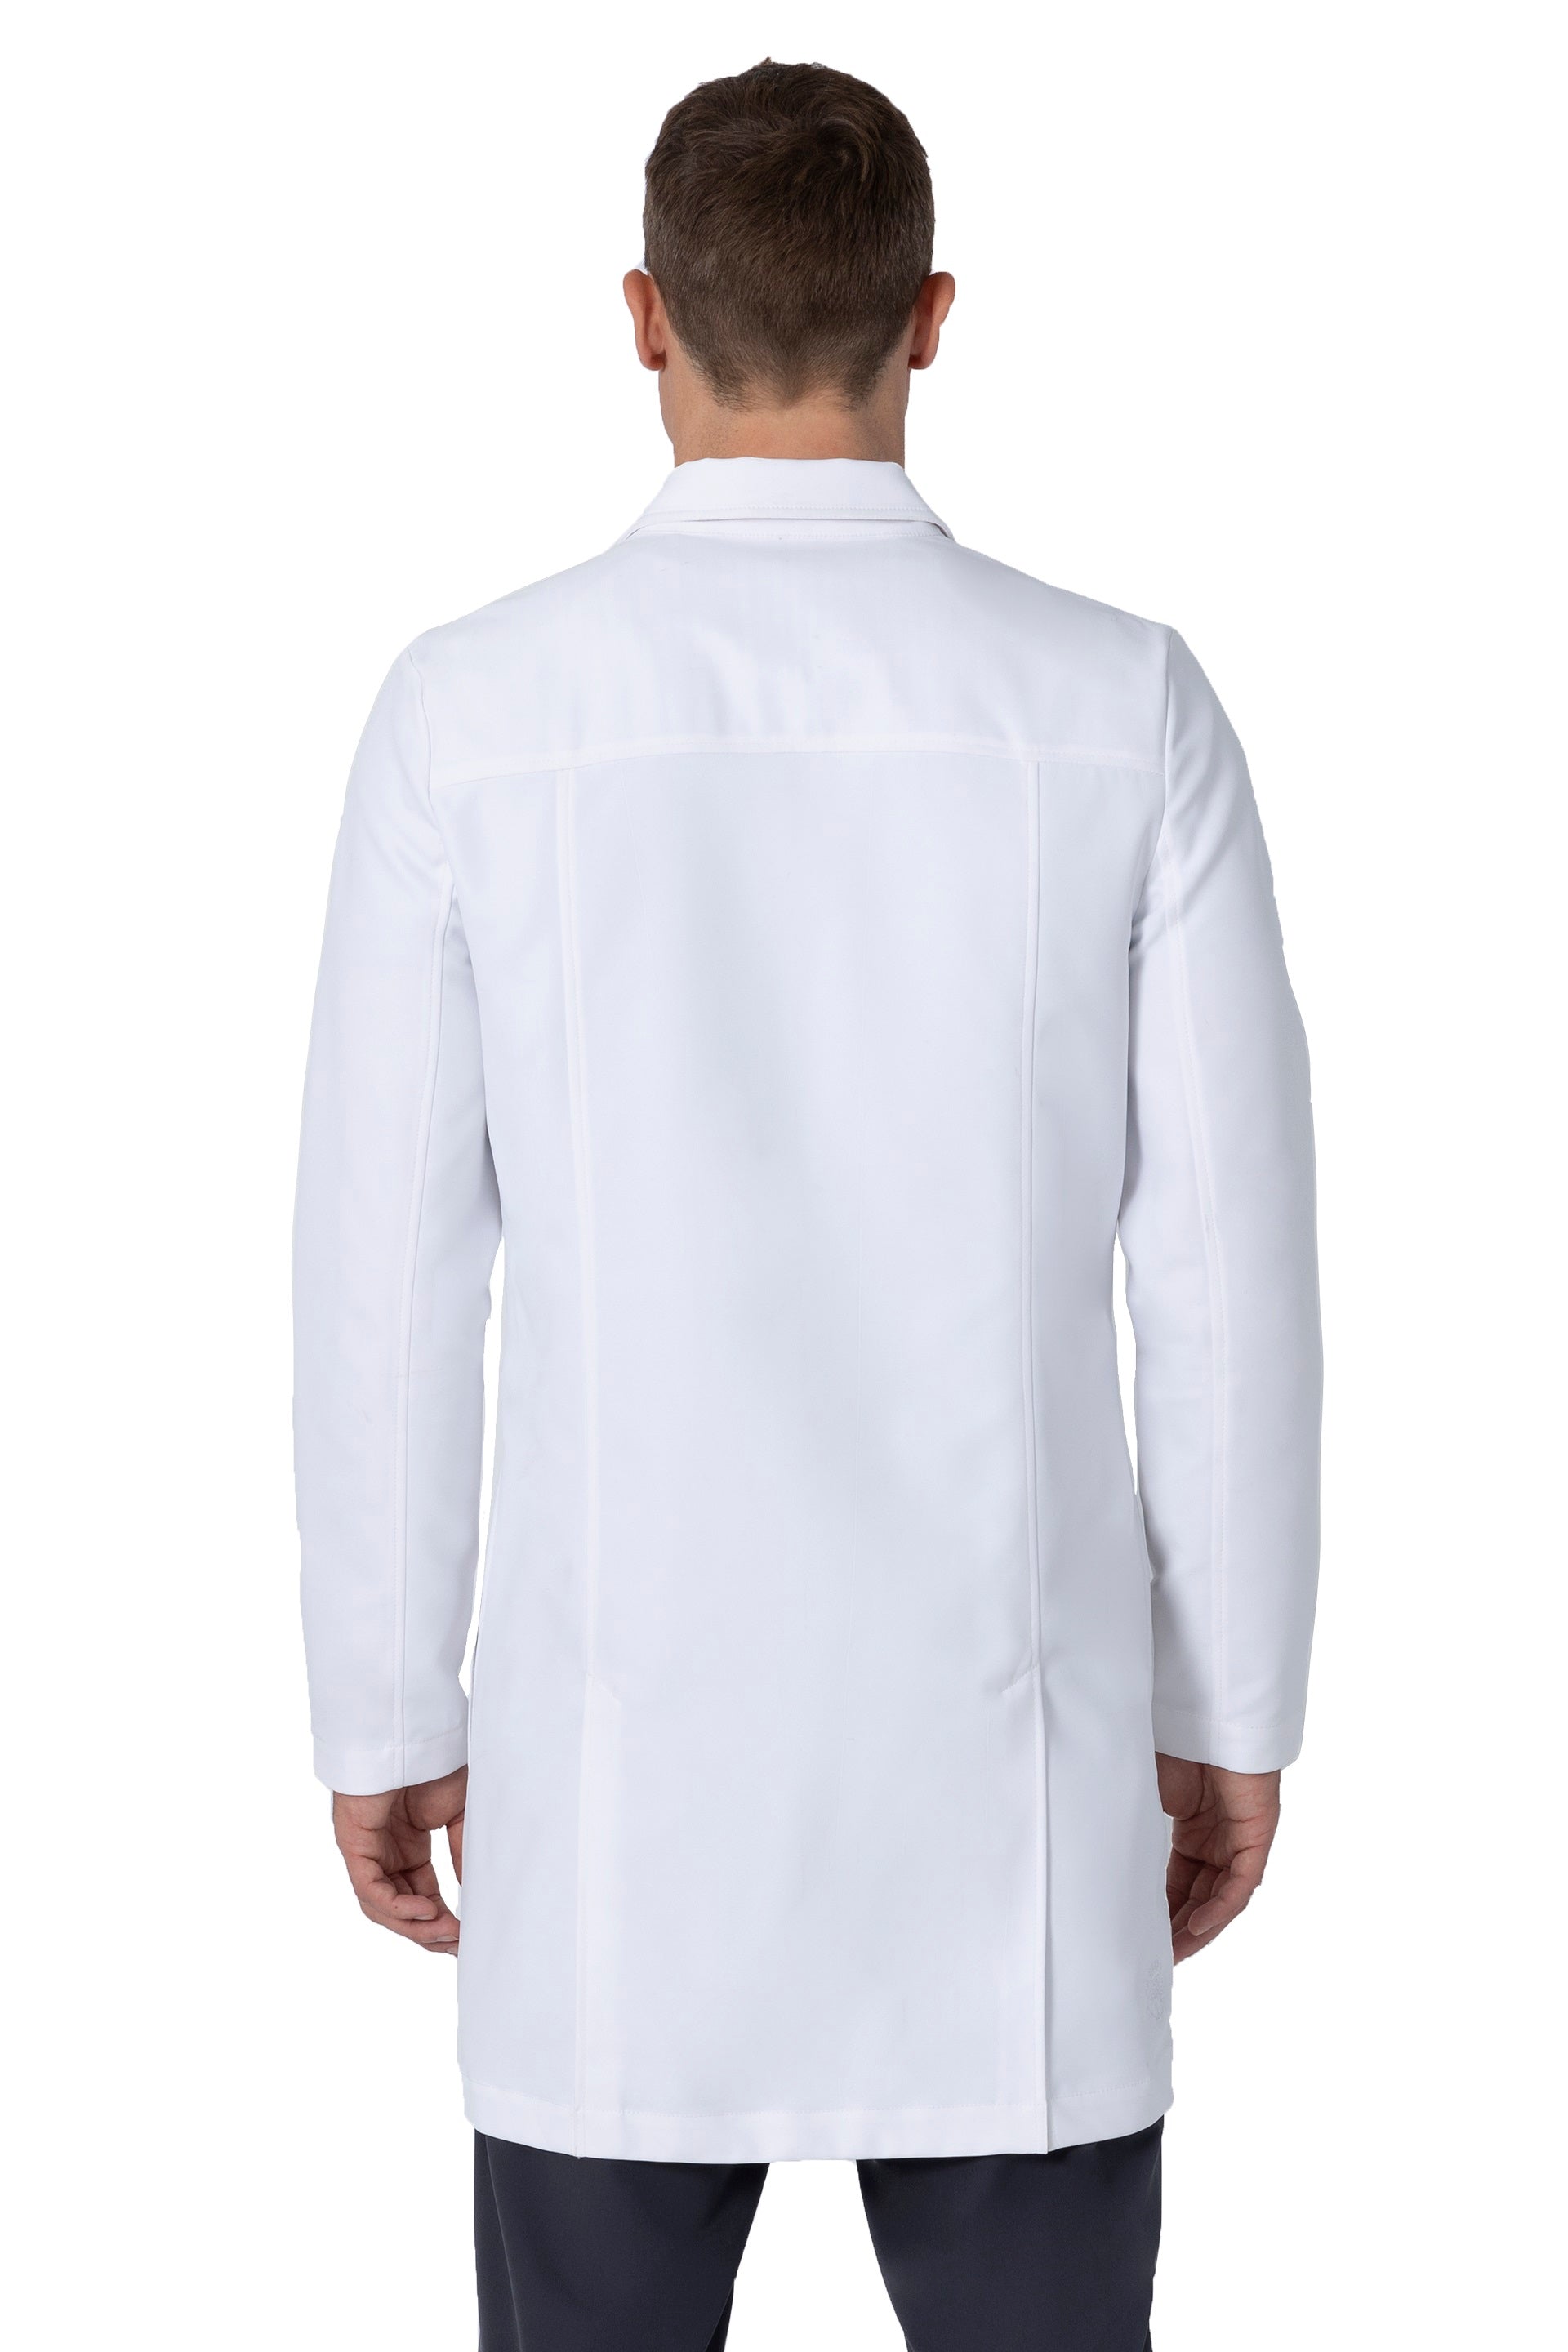 Healing Hands 5103 Lyndon Lab Coat White back 